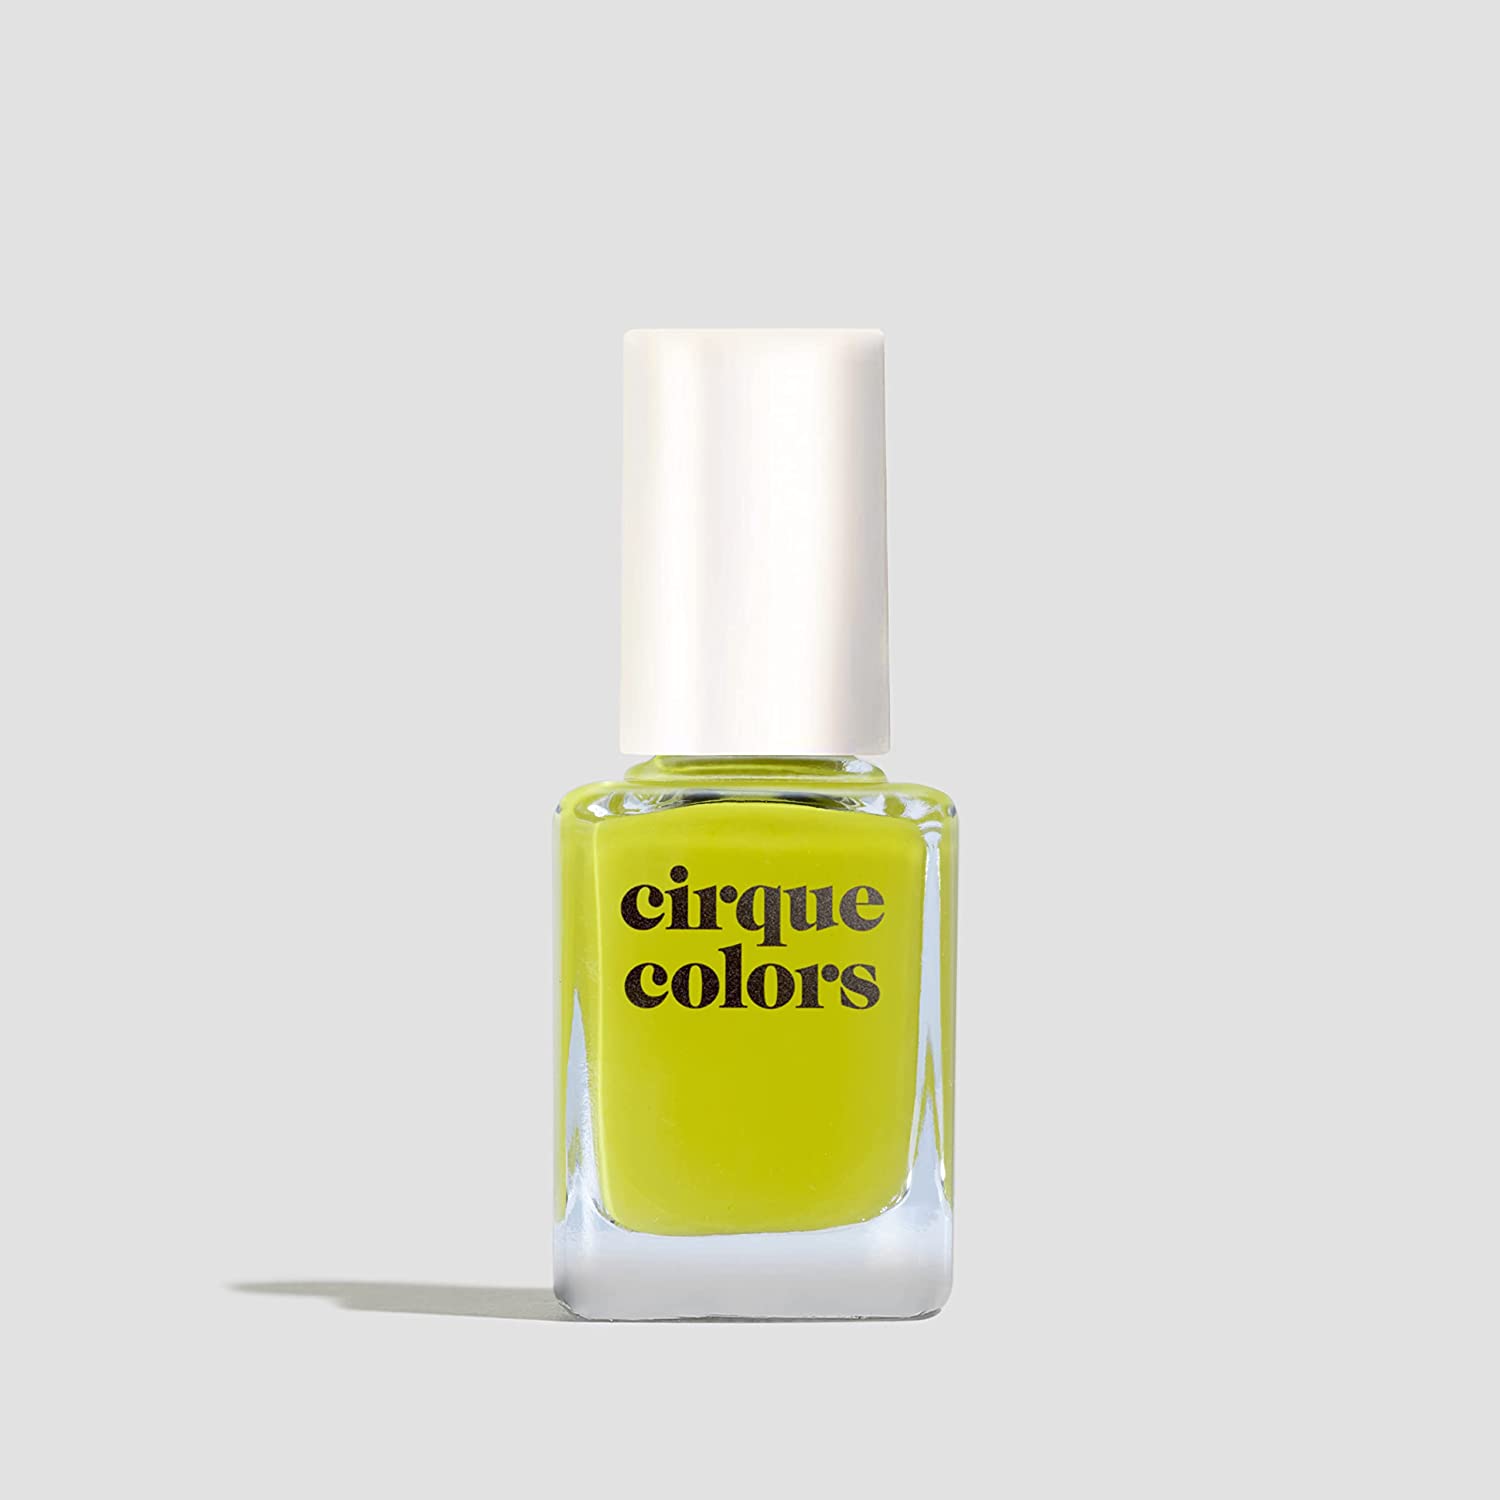 Cirque Colors Creme Nail Polish - Chartreuse Yellow (Hustle)